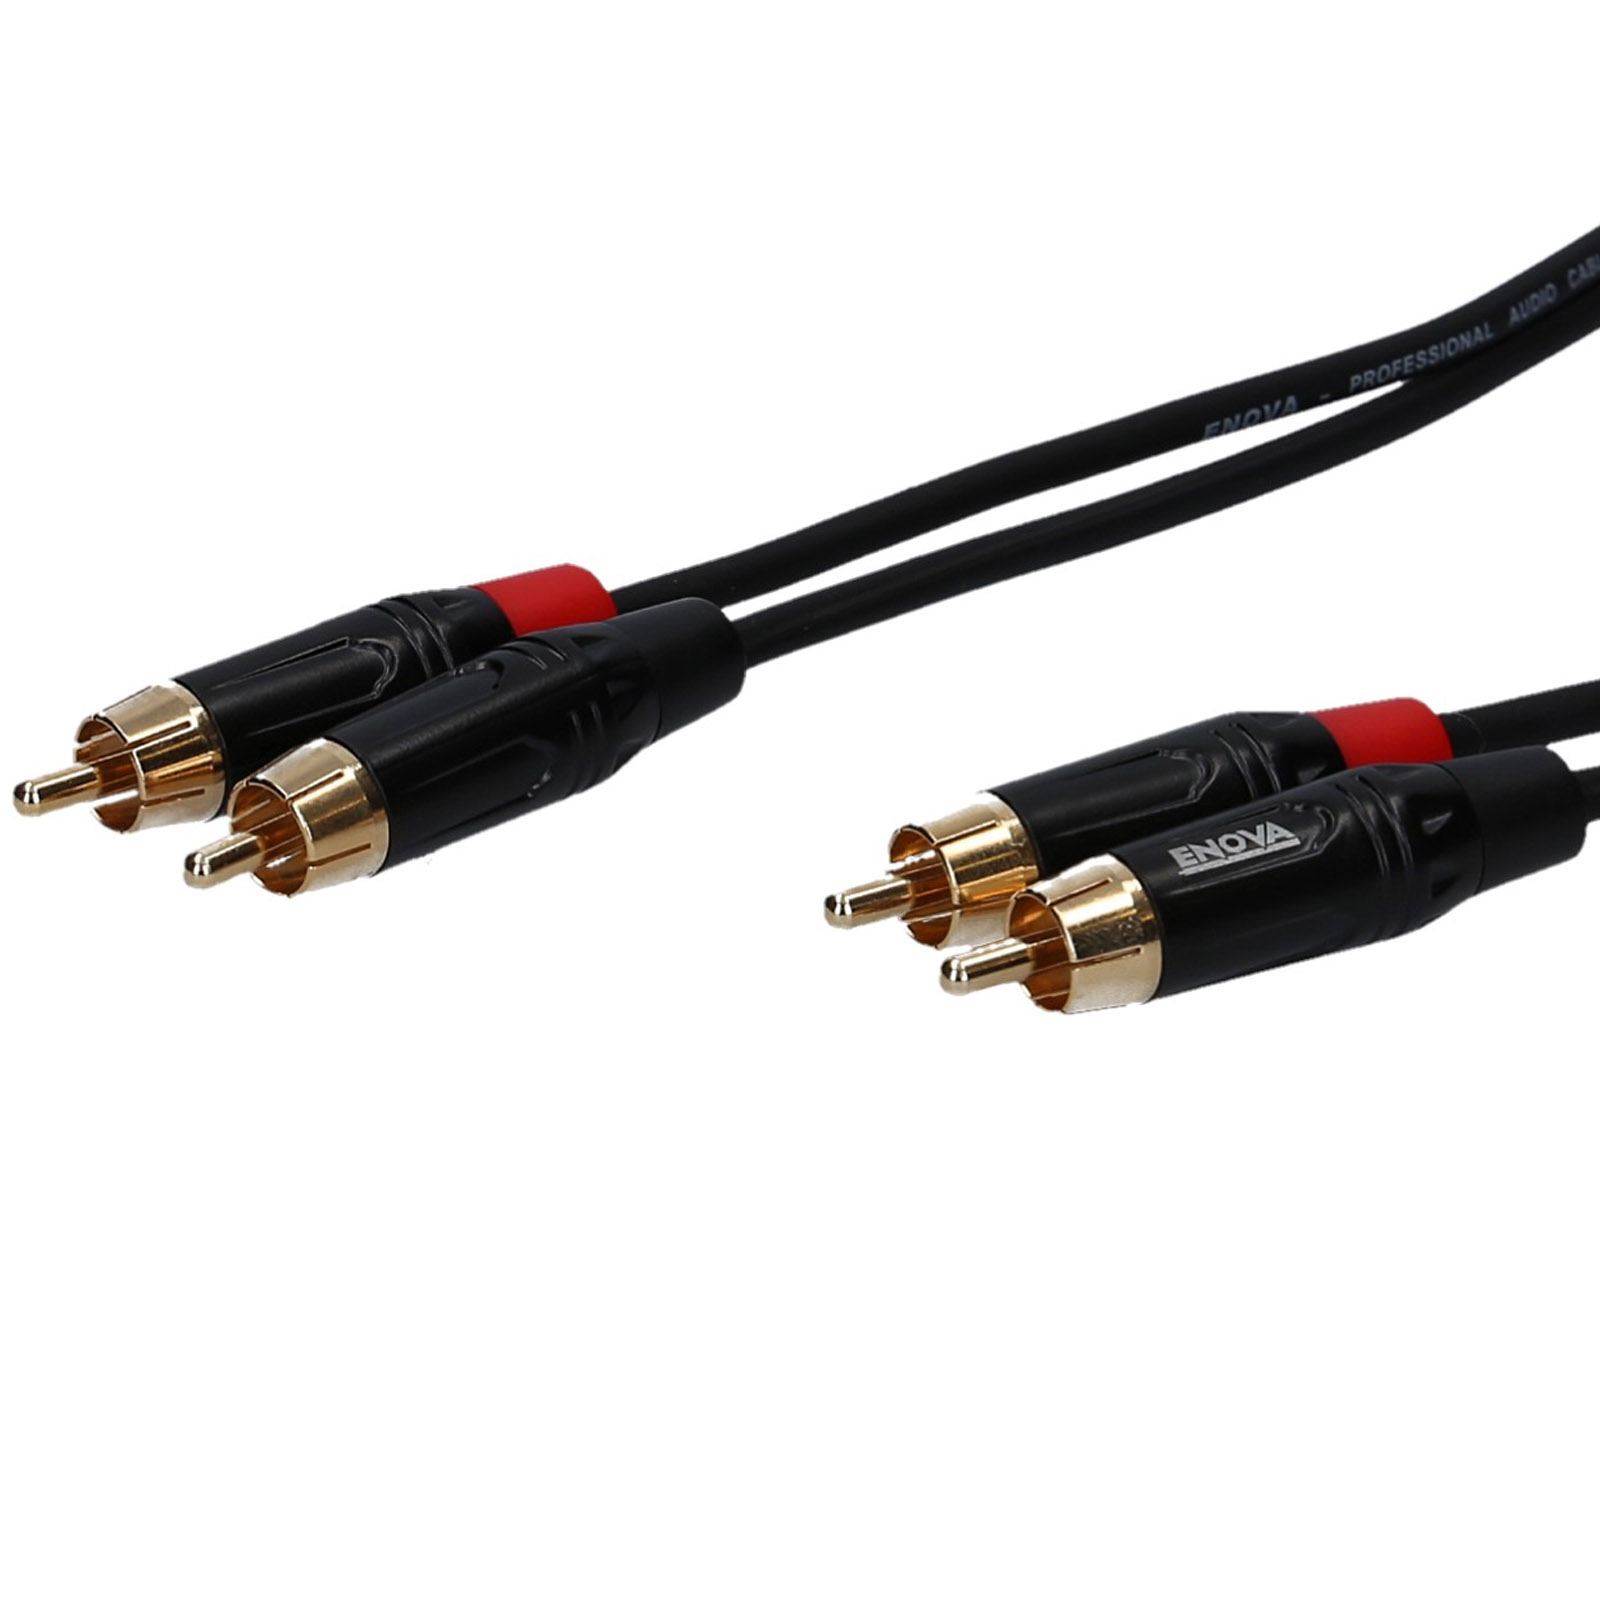 Kabel stereo, male 3 RCA Kabel, schwarz rot Cinch Audio & m ENOVA 3 m